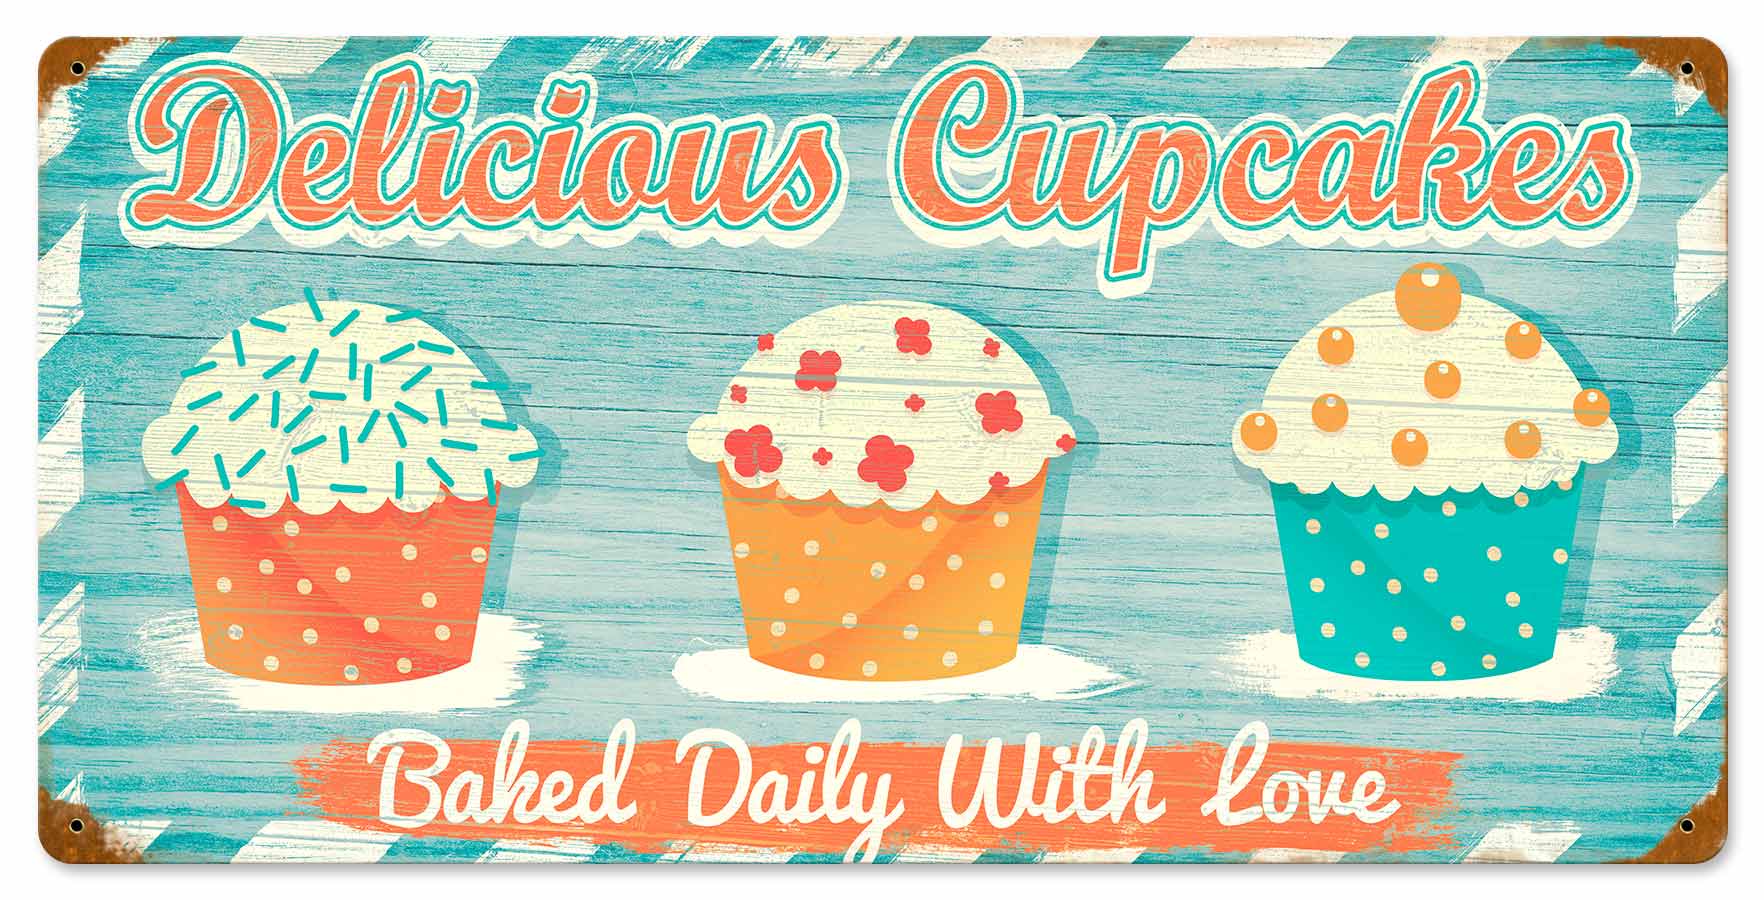 Delicious Cupcakes Vintage Sign